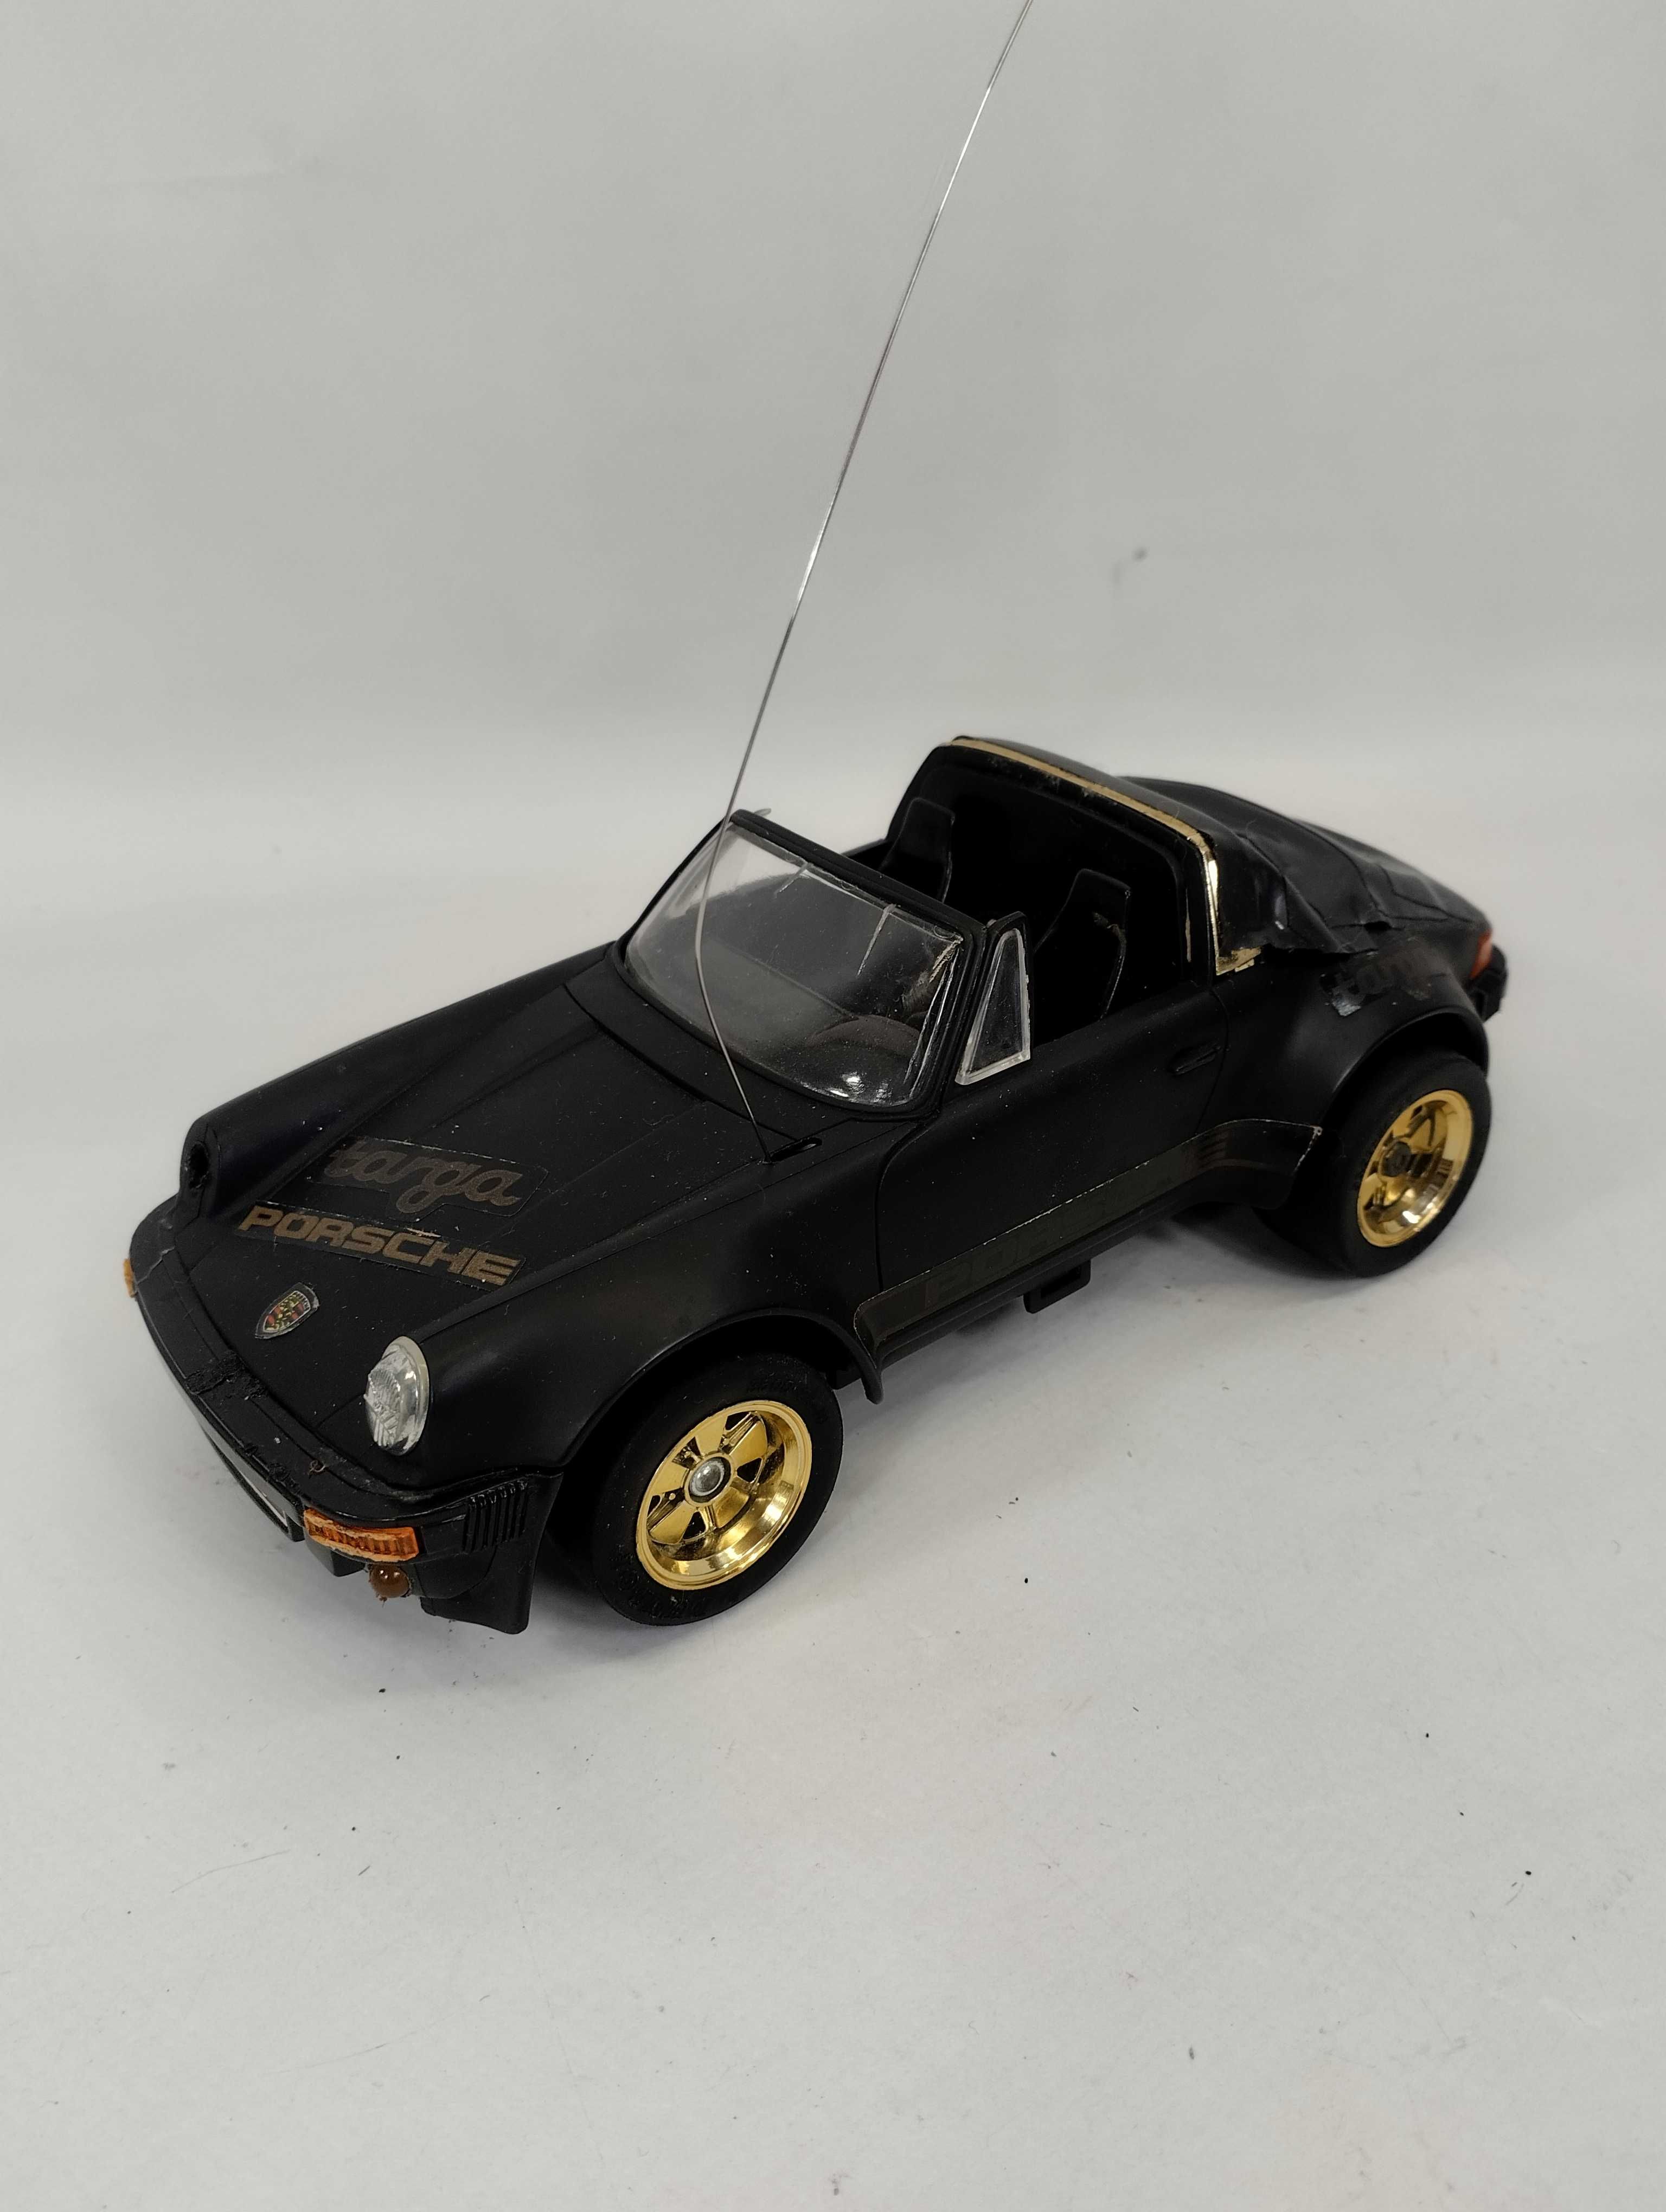 Model Zdalnie sterowany Porsche Targa Taiyo